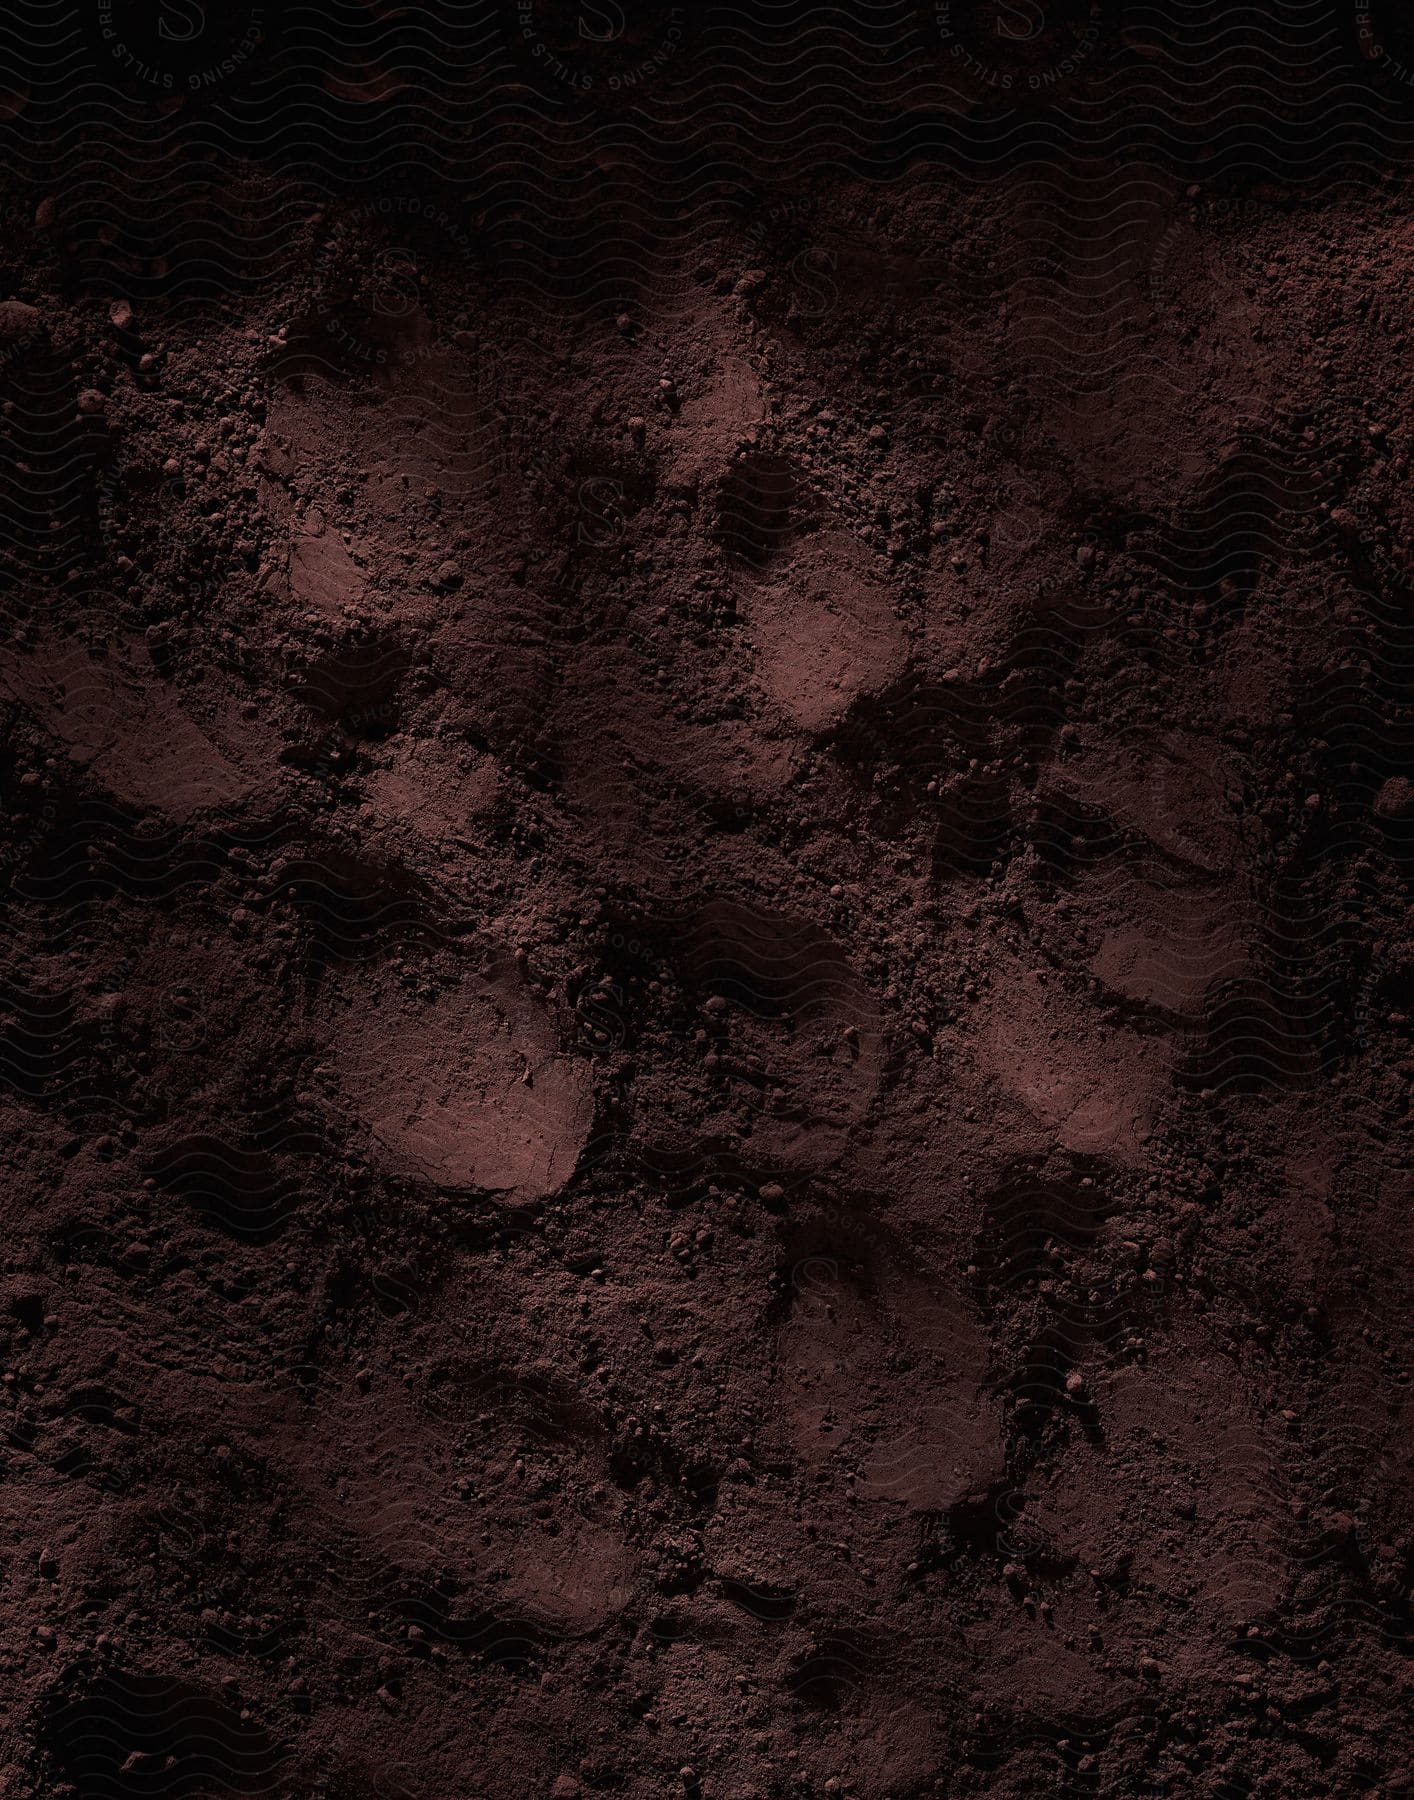 Visible footprints in dirt